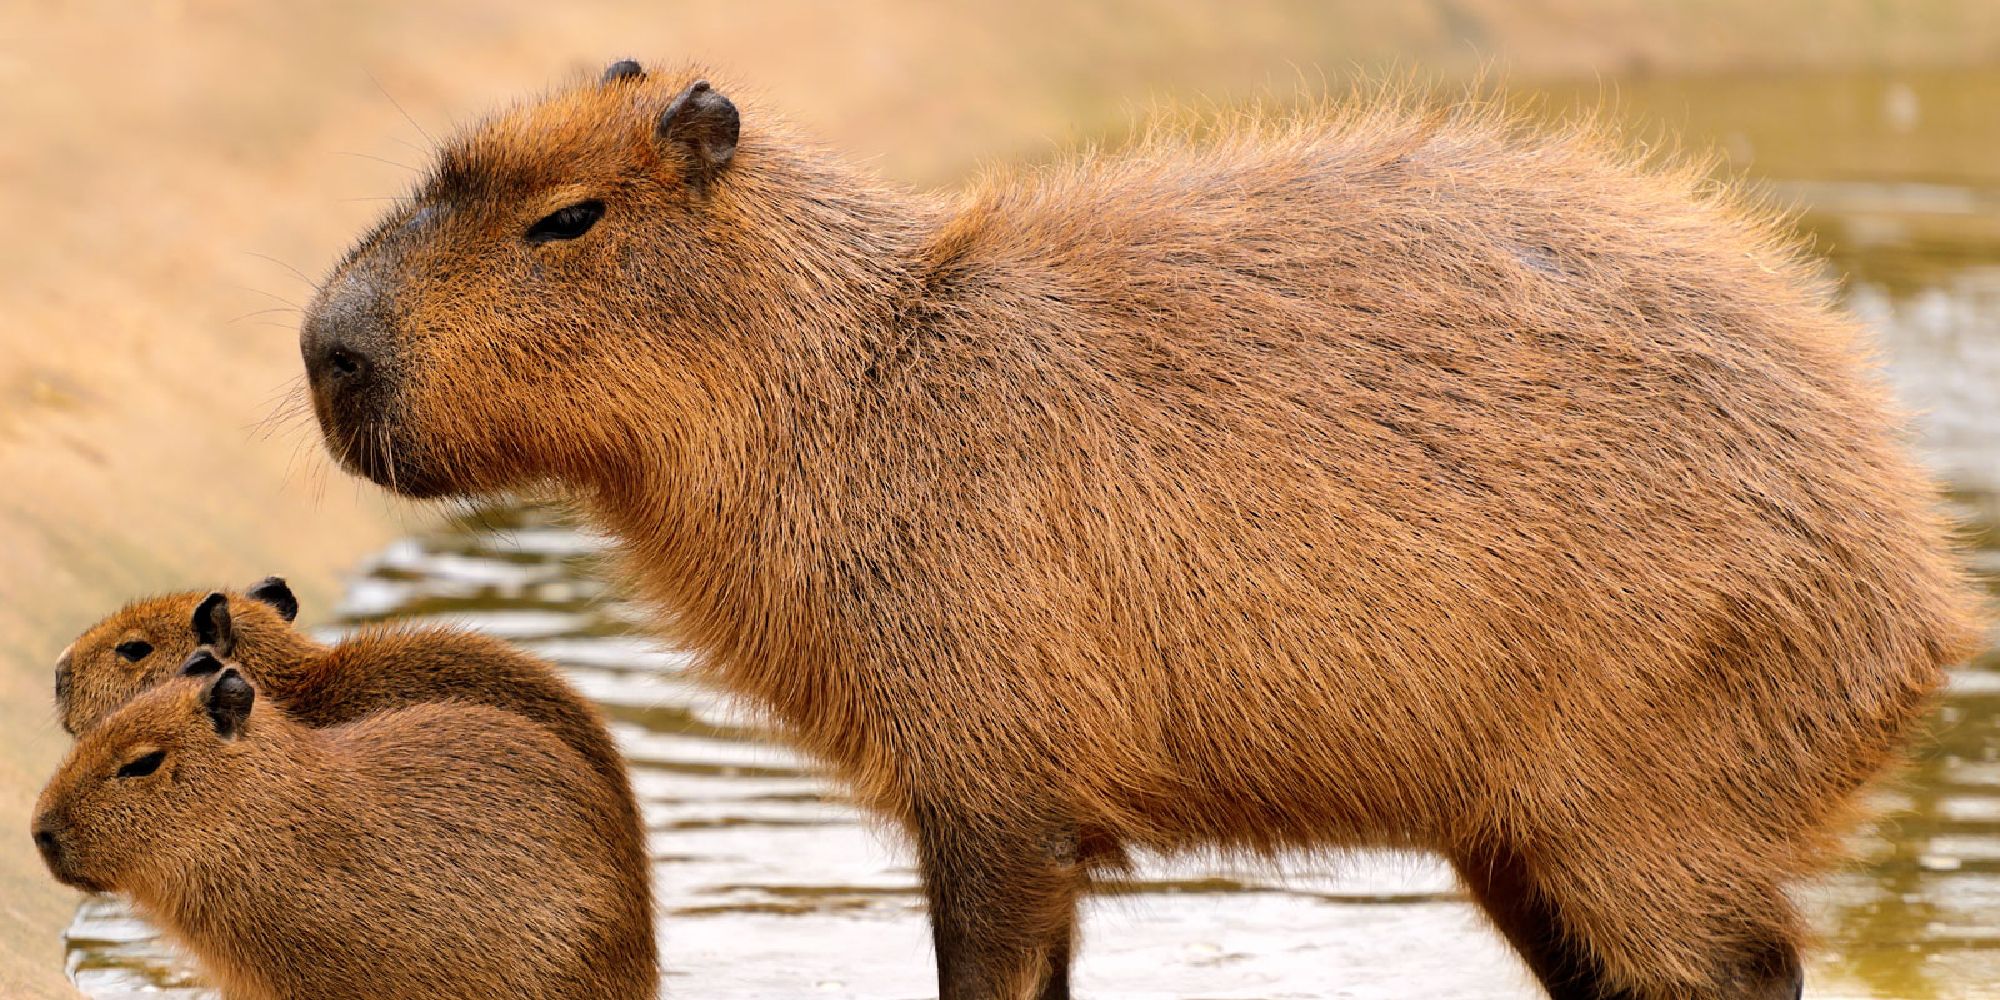 A large capybara standing behind two smaller capybara in a lake